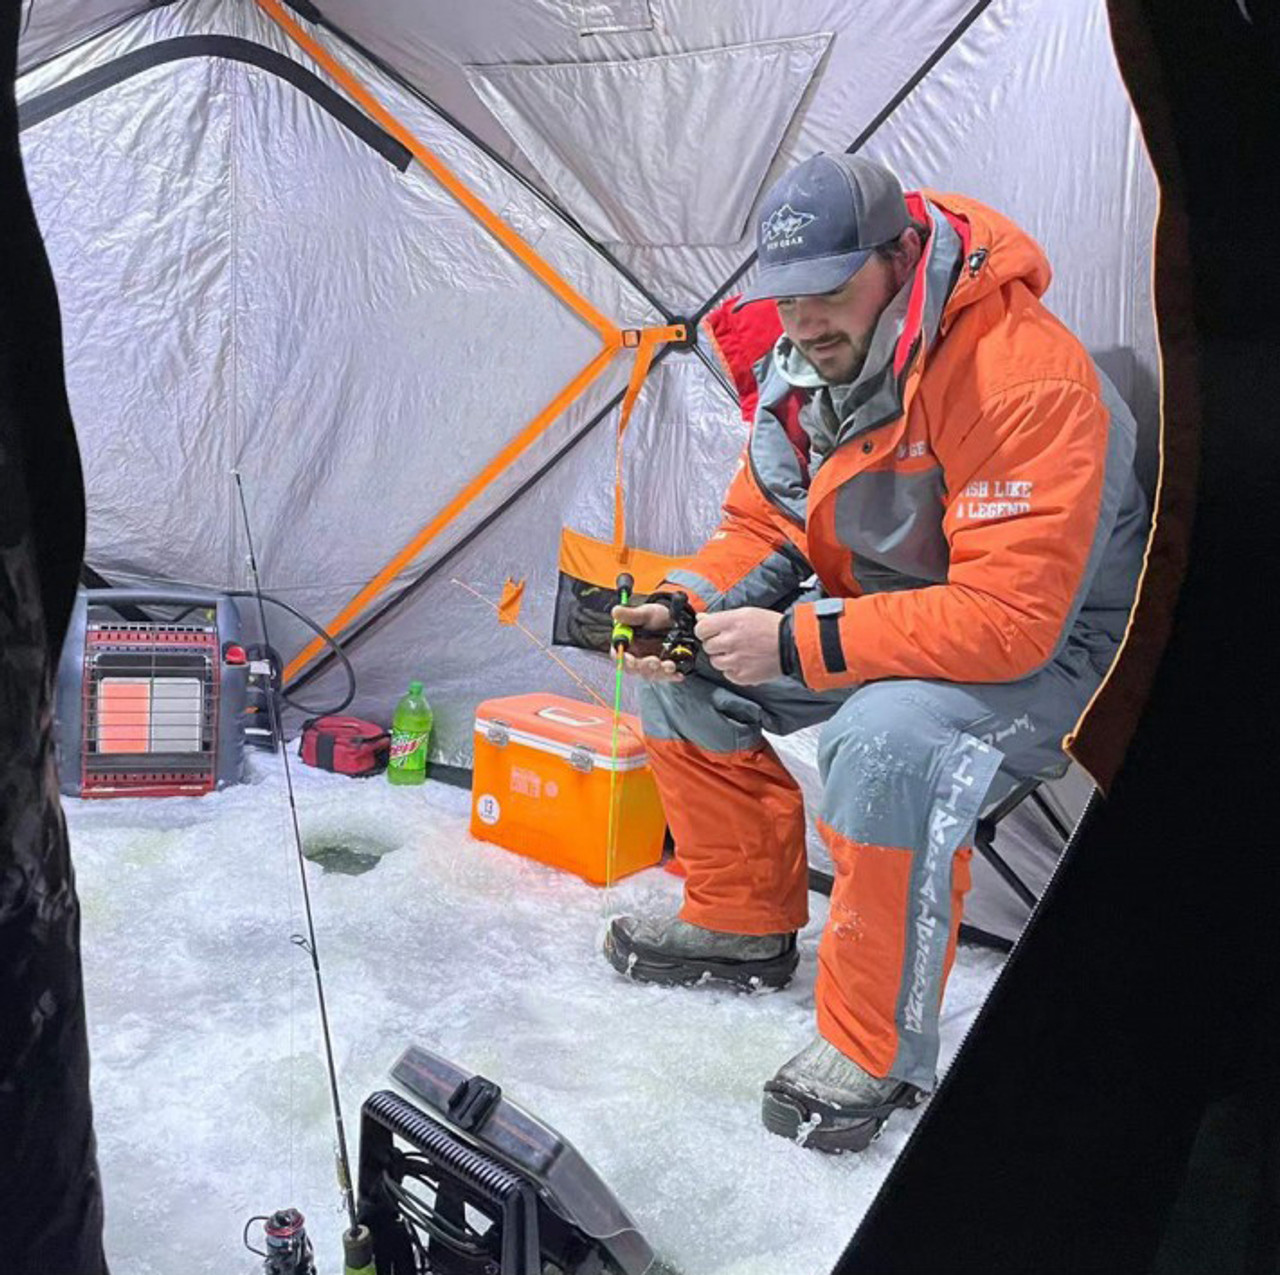 Ice Fishing Equipment for Scandinavian Locals